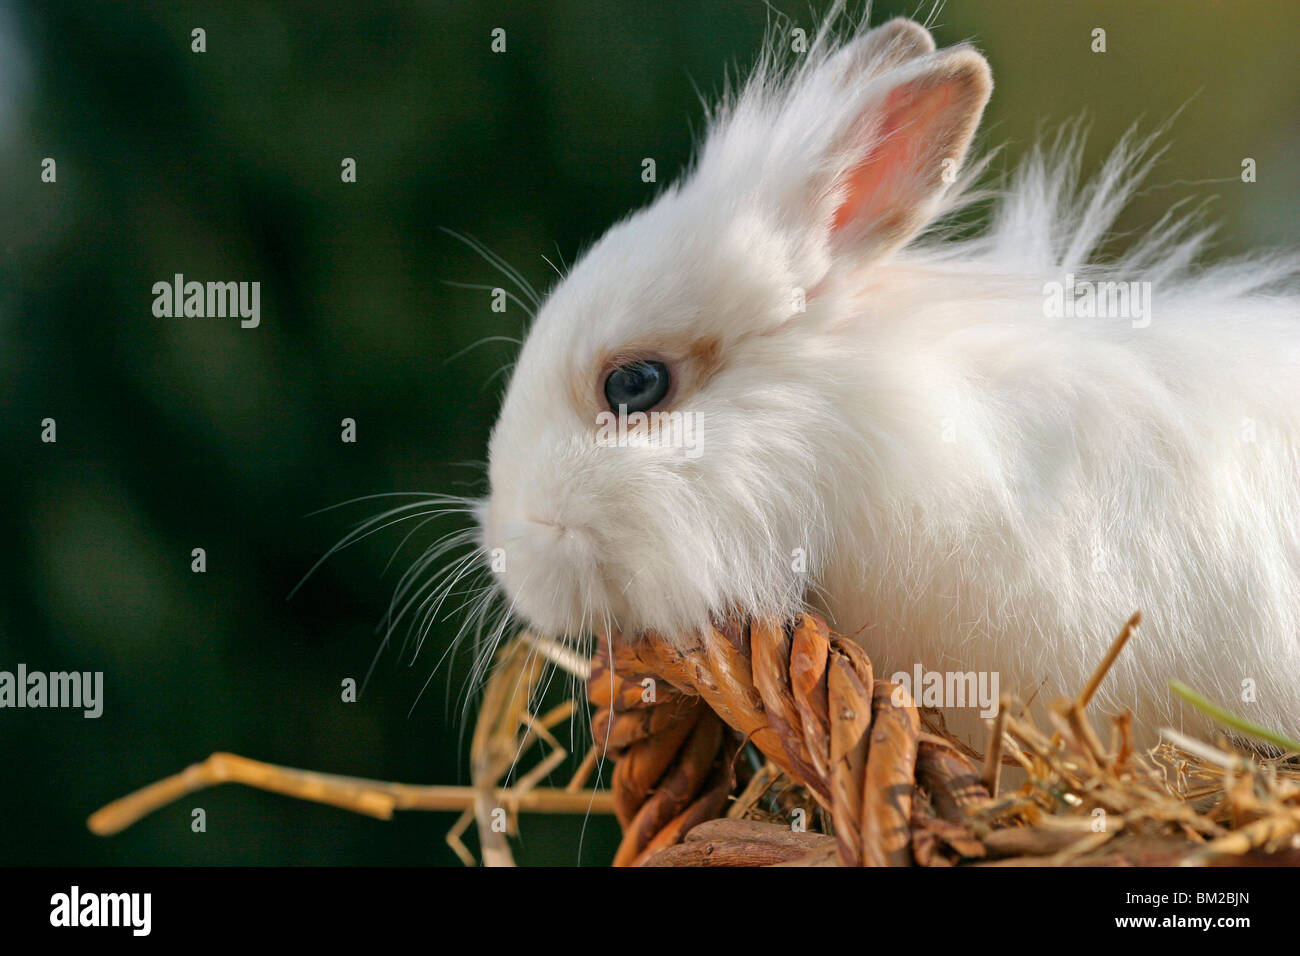 Löwenköpfchen / bunny Stock Photo